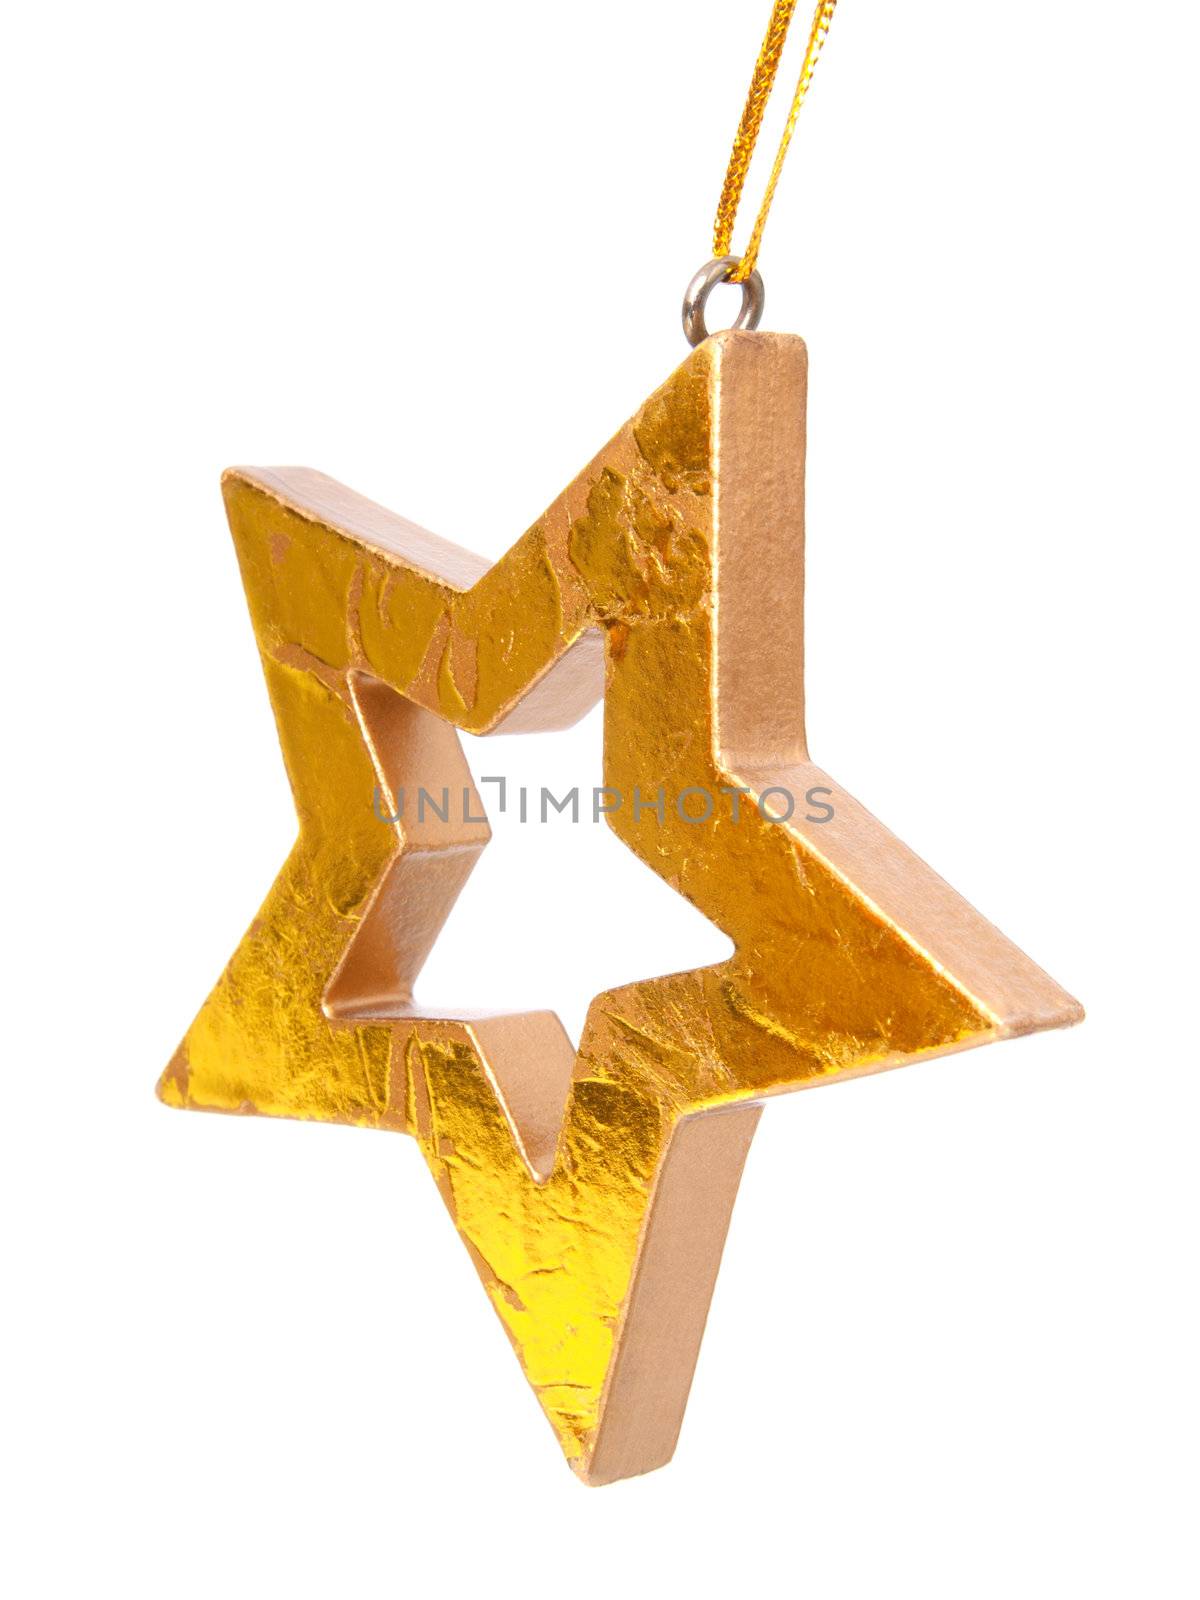 Golden Christmas star, isolated on white background 